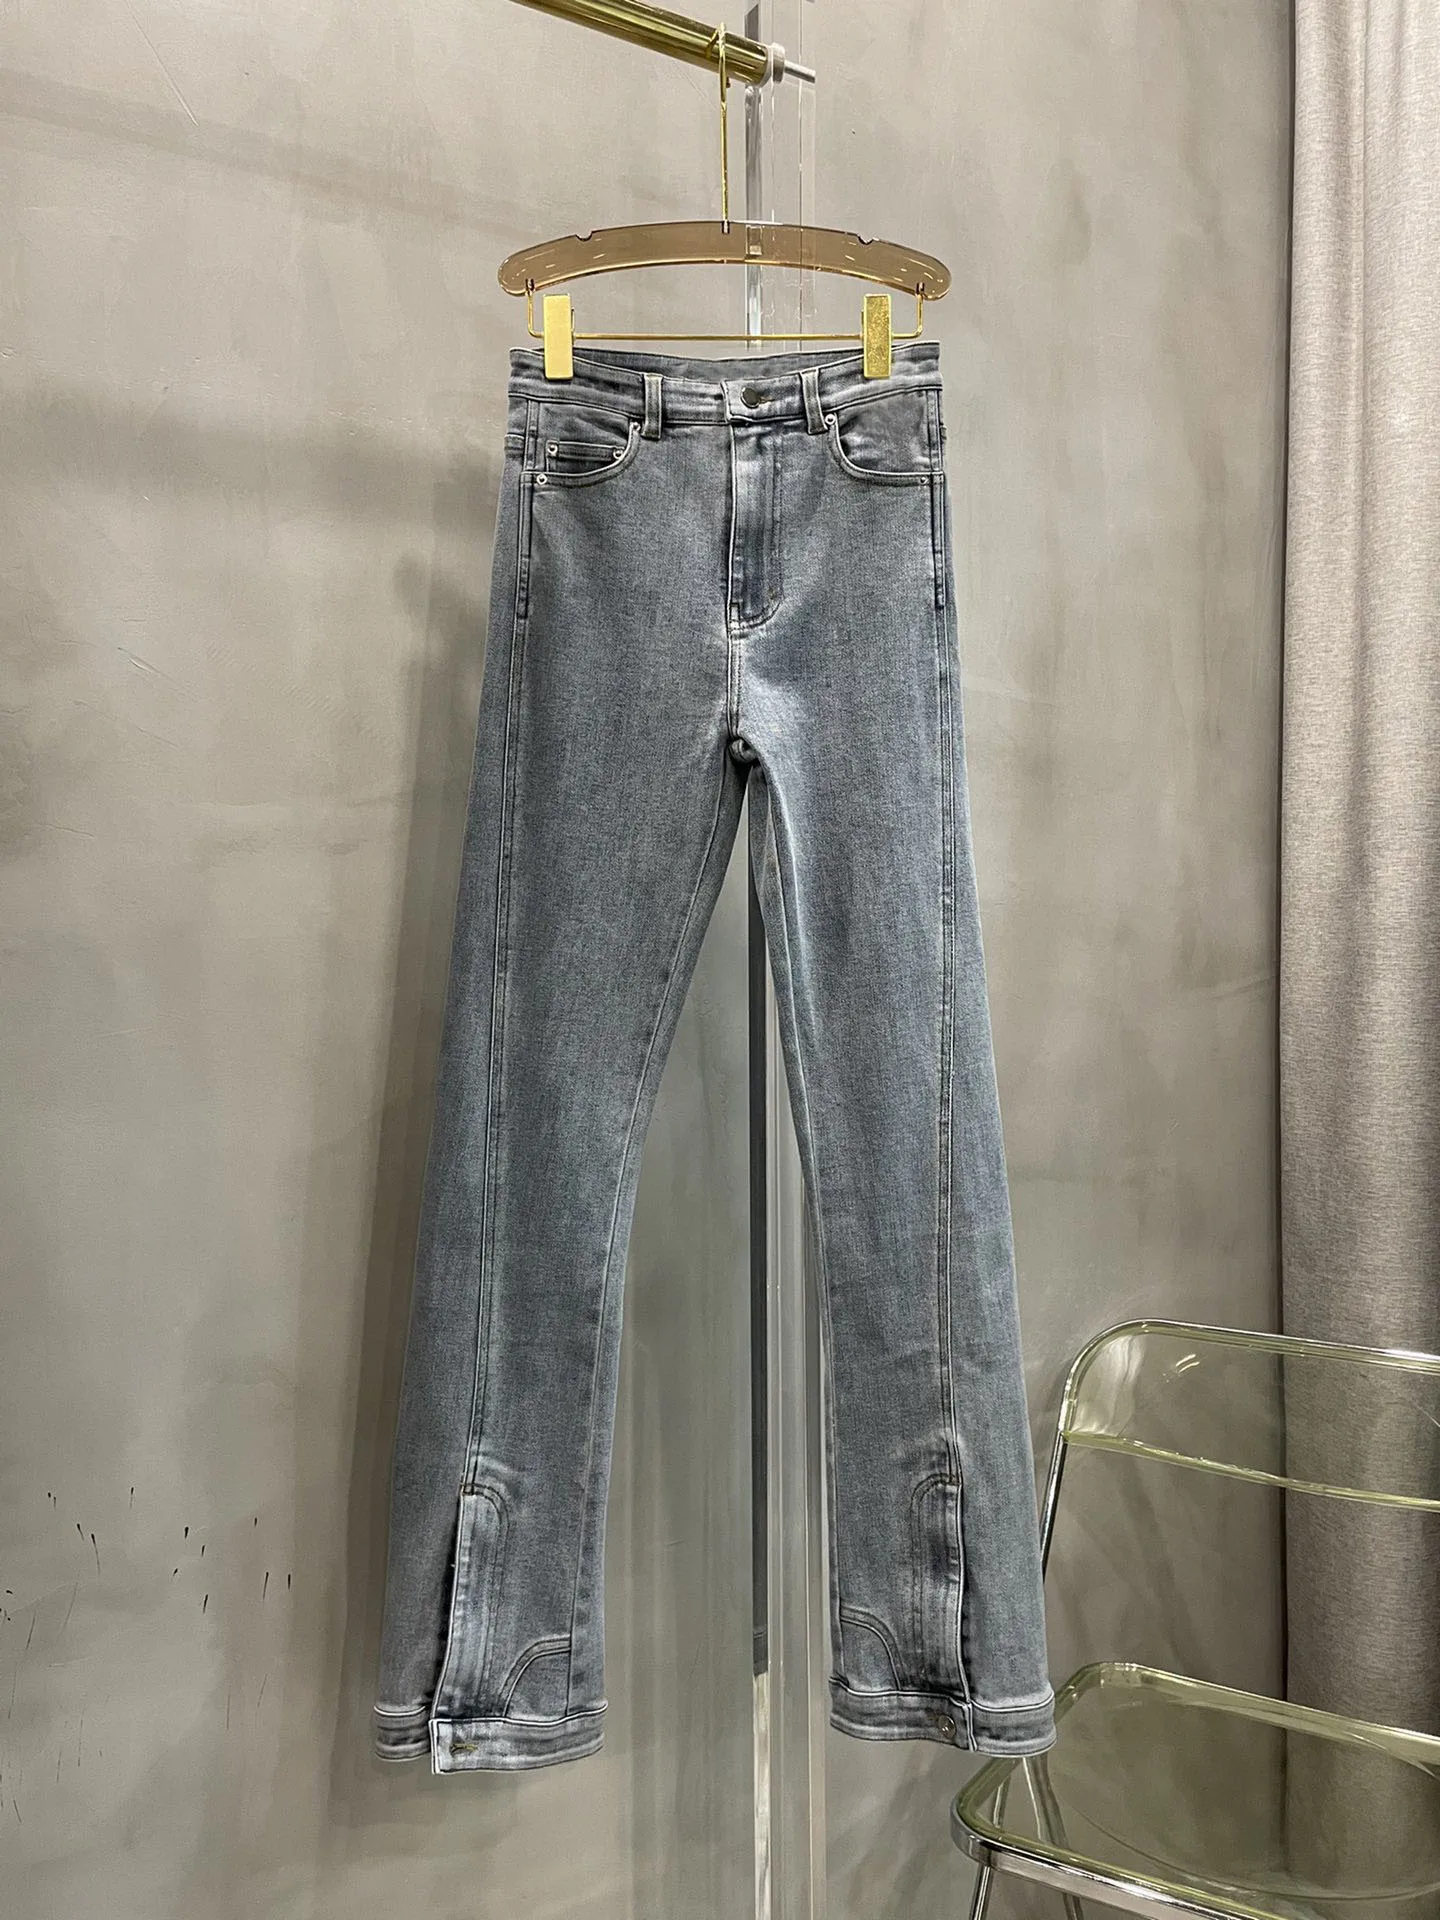 Version of the great good jeans long legs sharp pants leg buckle slit